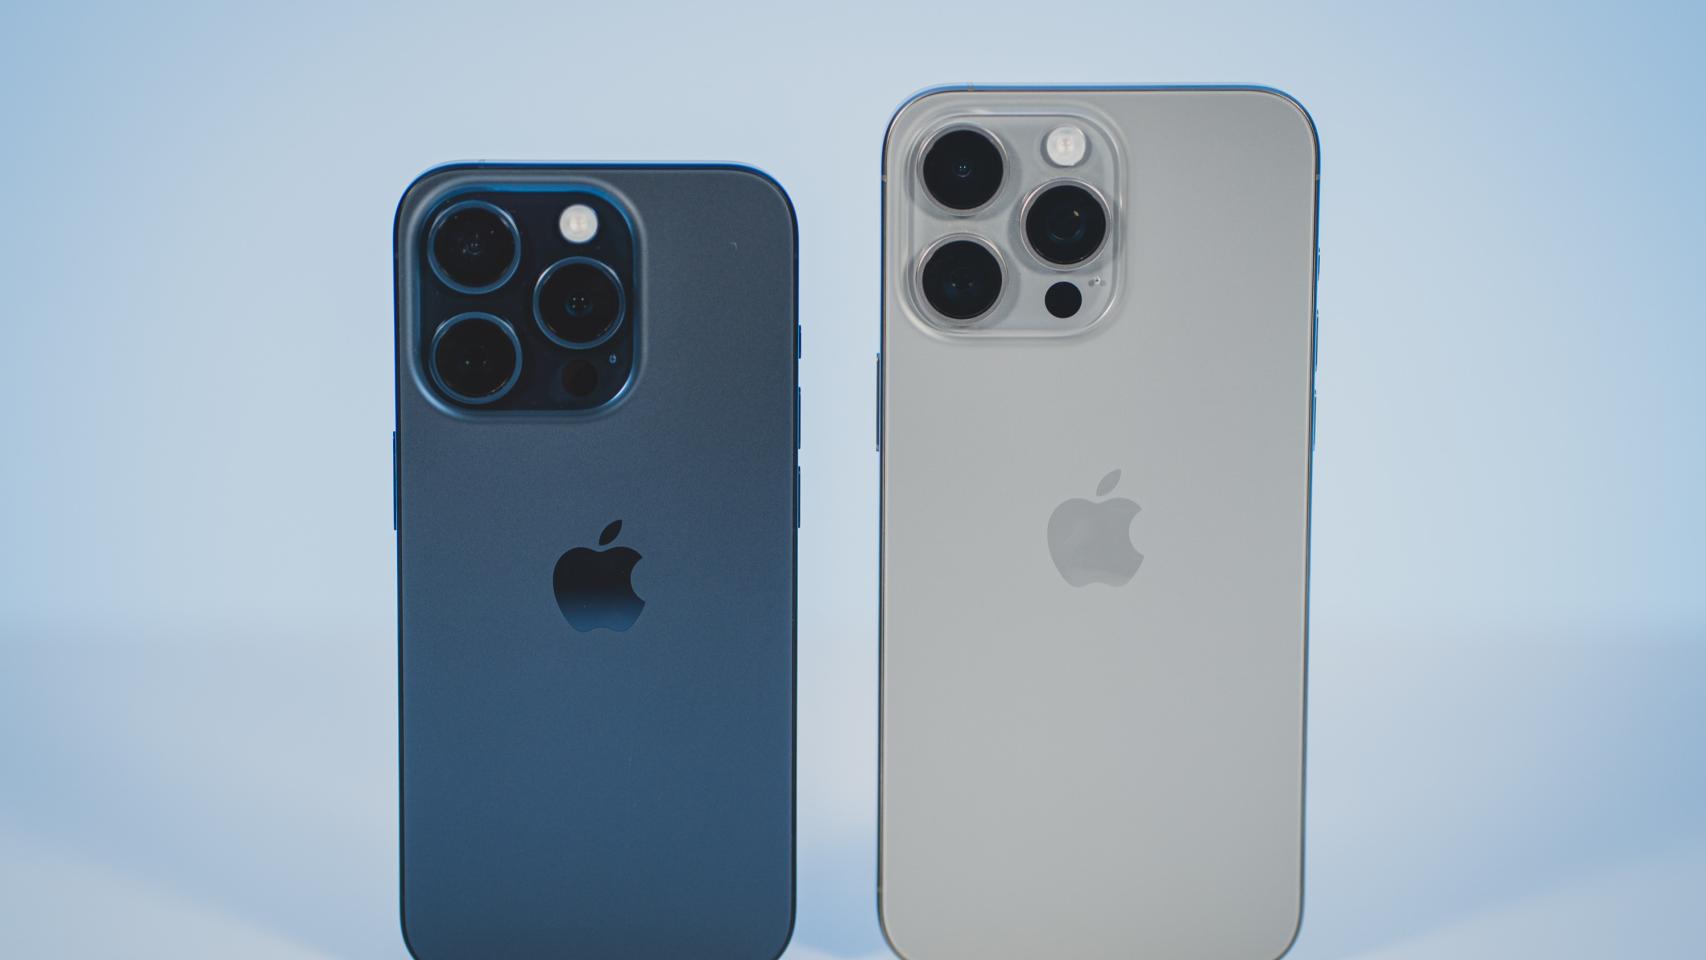 iPhone 15 Pro (izq.) y iPhone 15 Pro Max (der.)